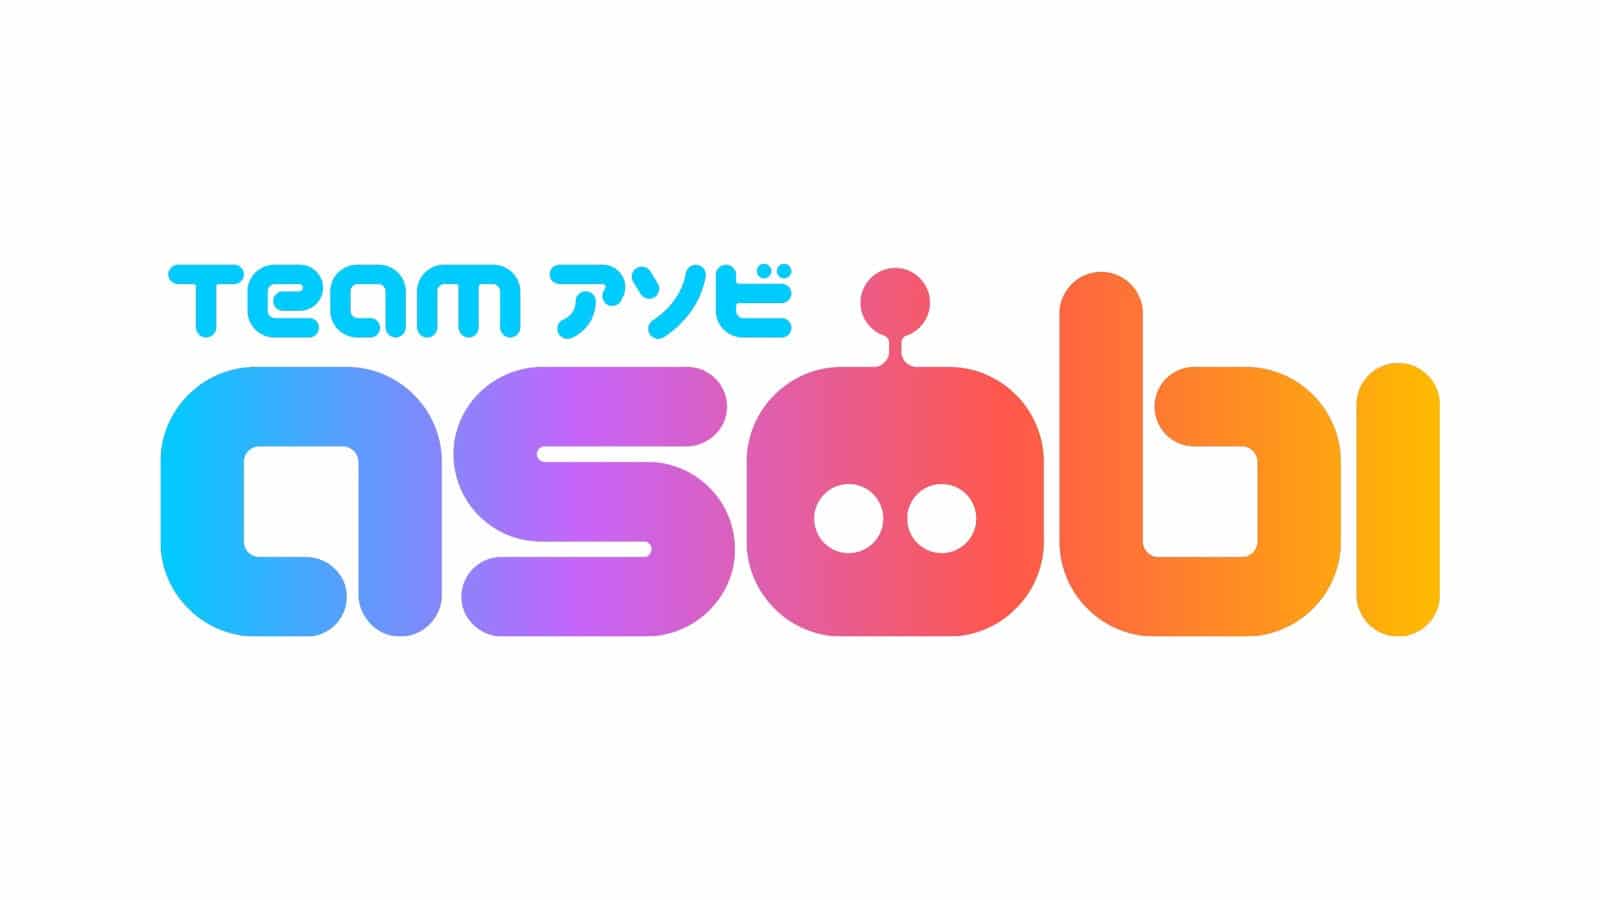 Team Asobi logo